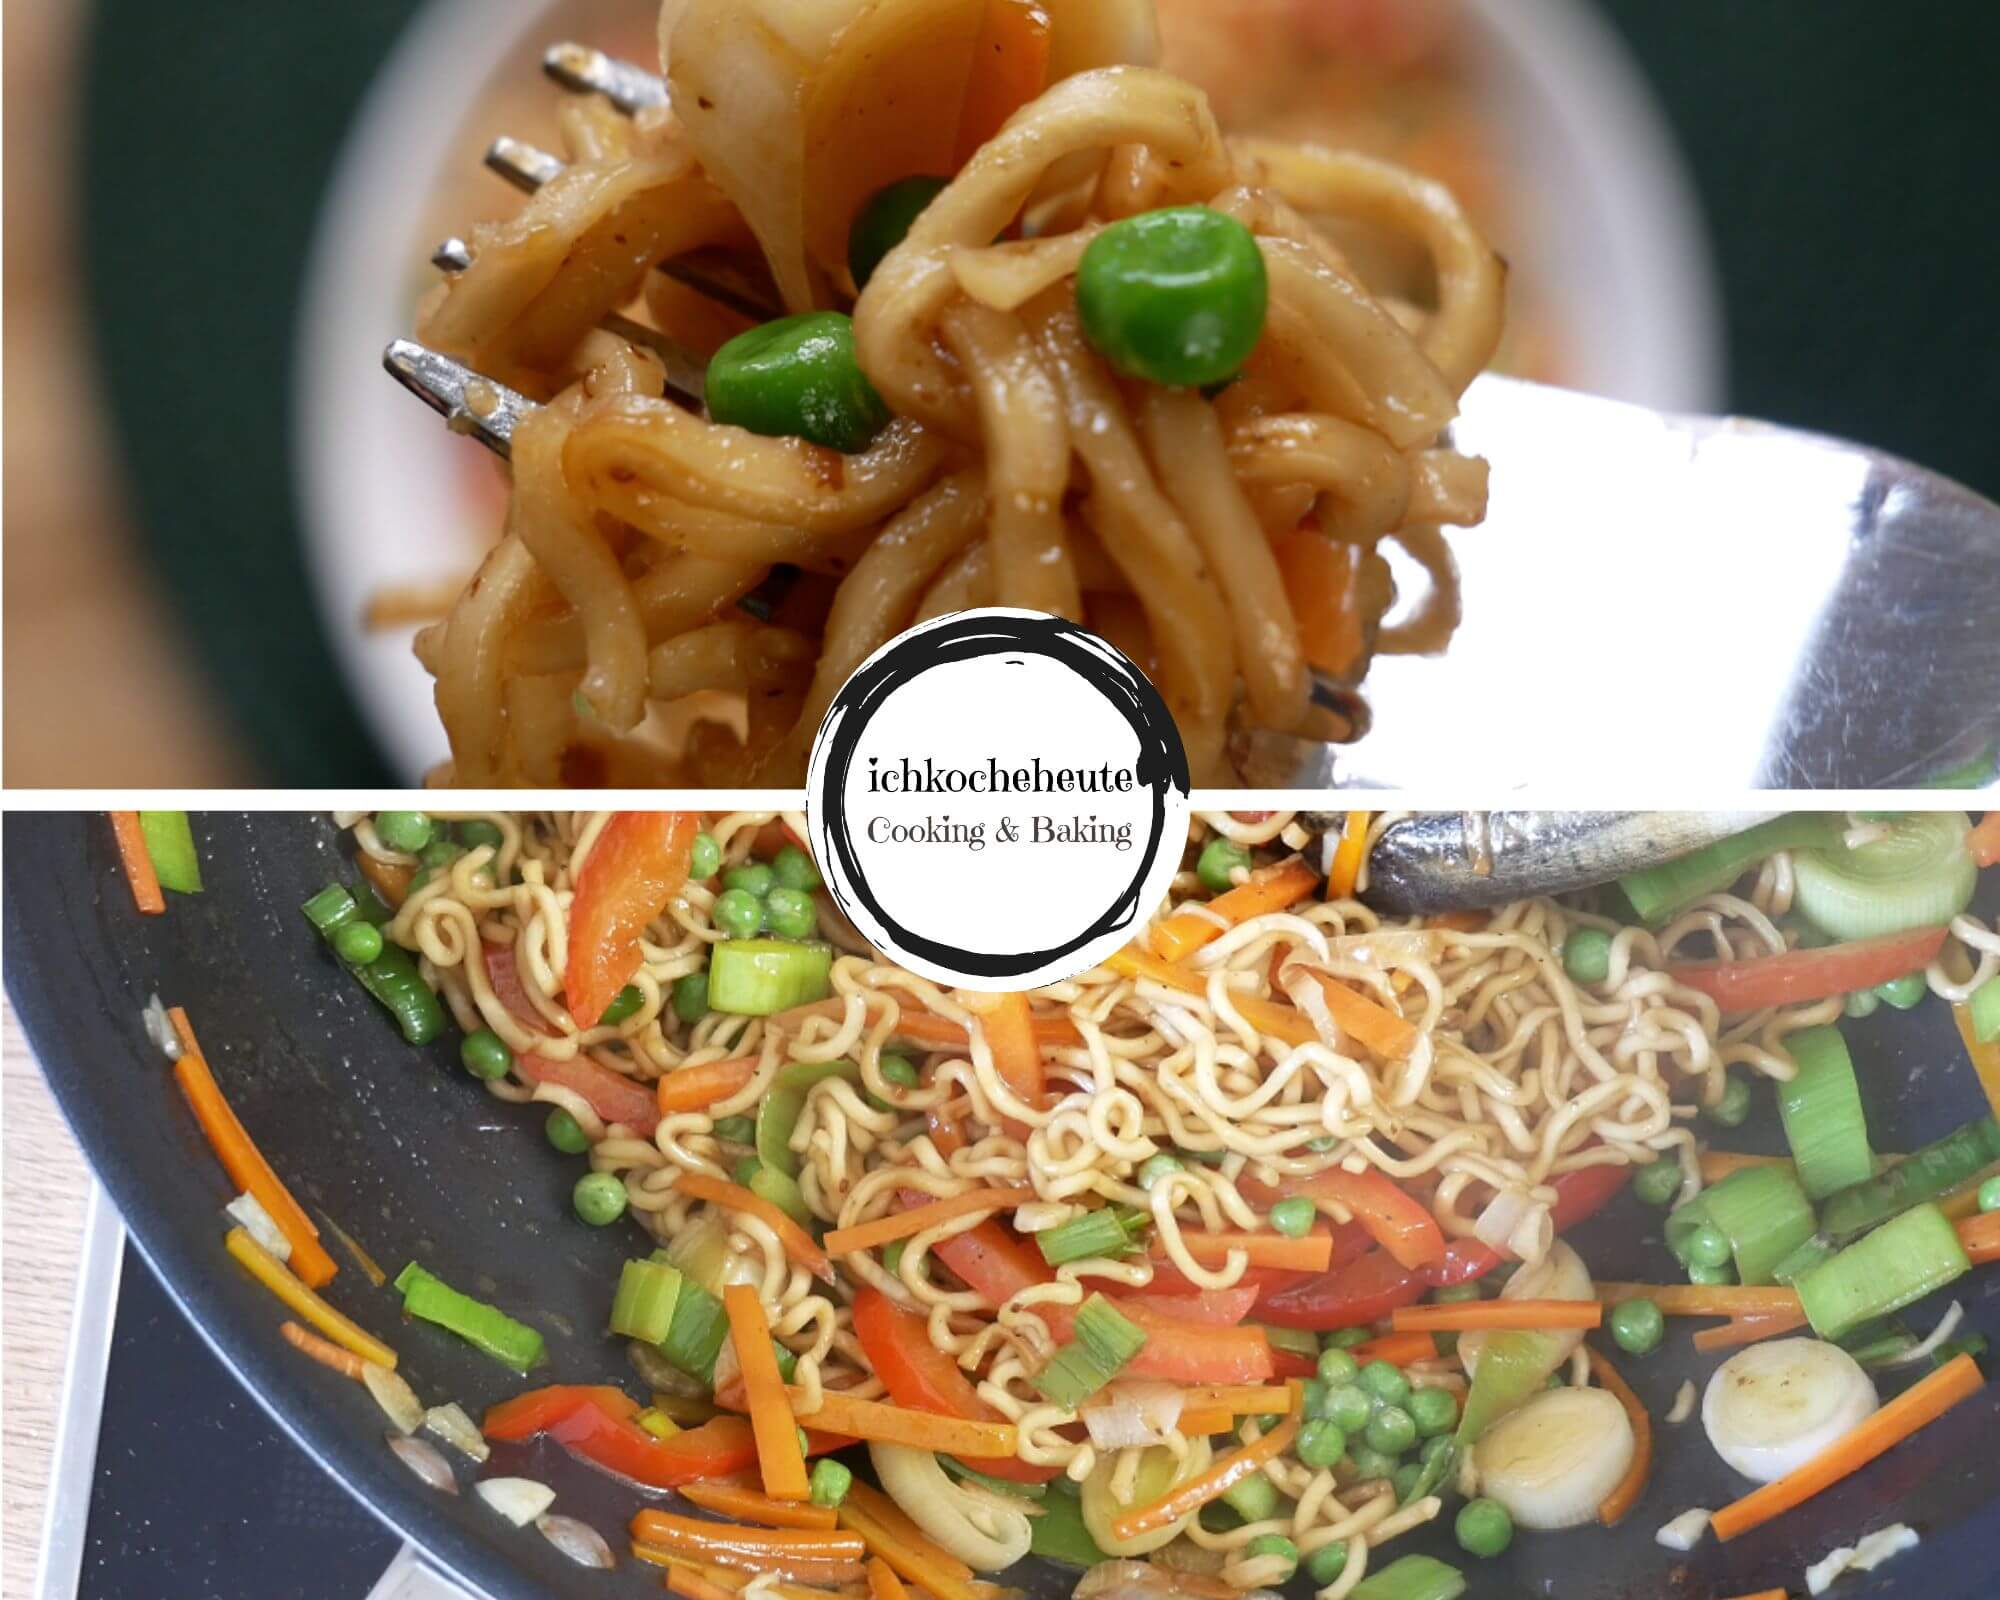 Serving Veggie Mie Noodle Wok Stir-Fry with Hoisin Sauce